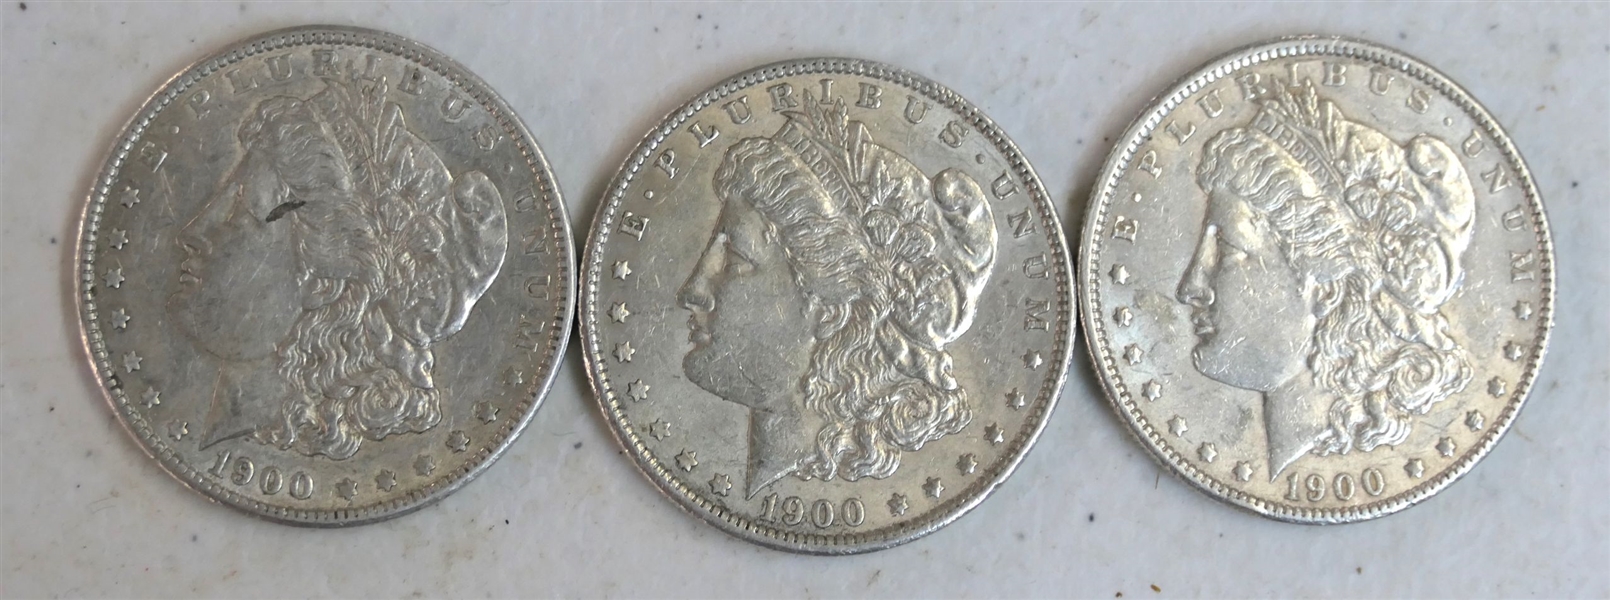 3 -1900 Morgan Silver Dollars 